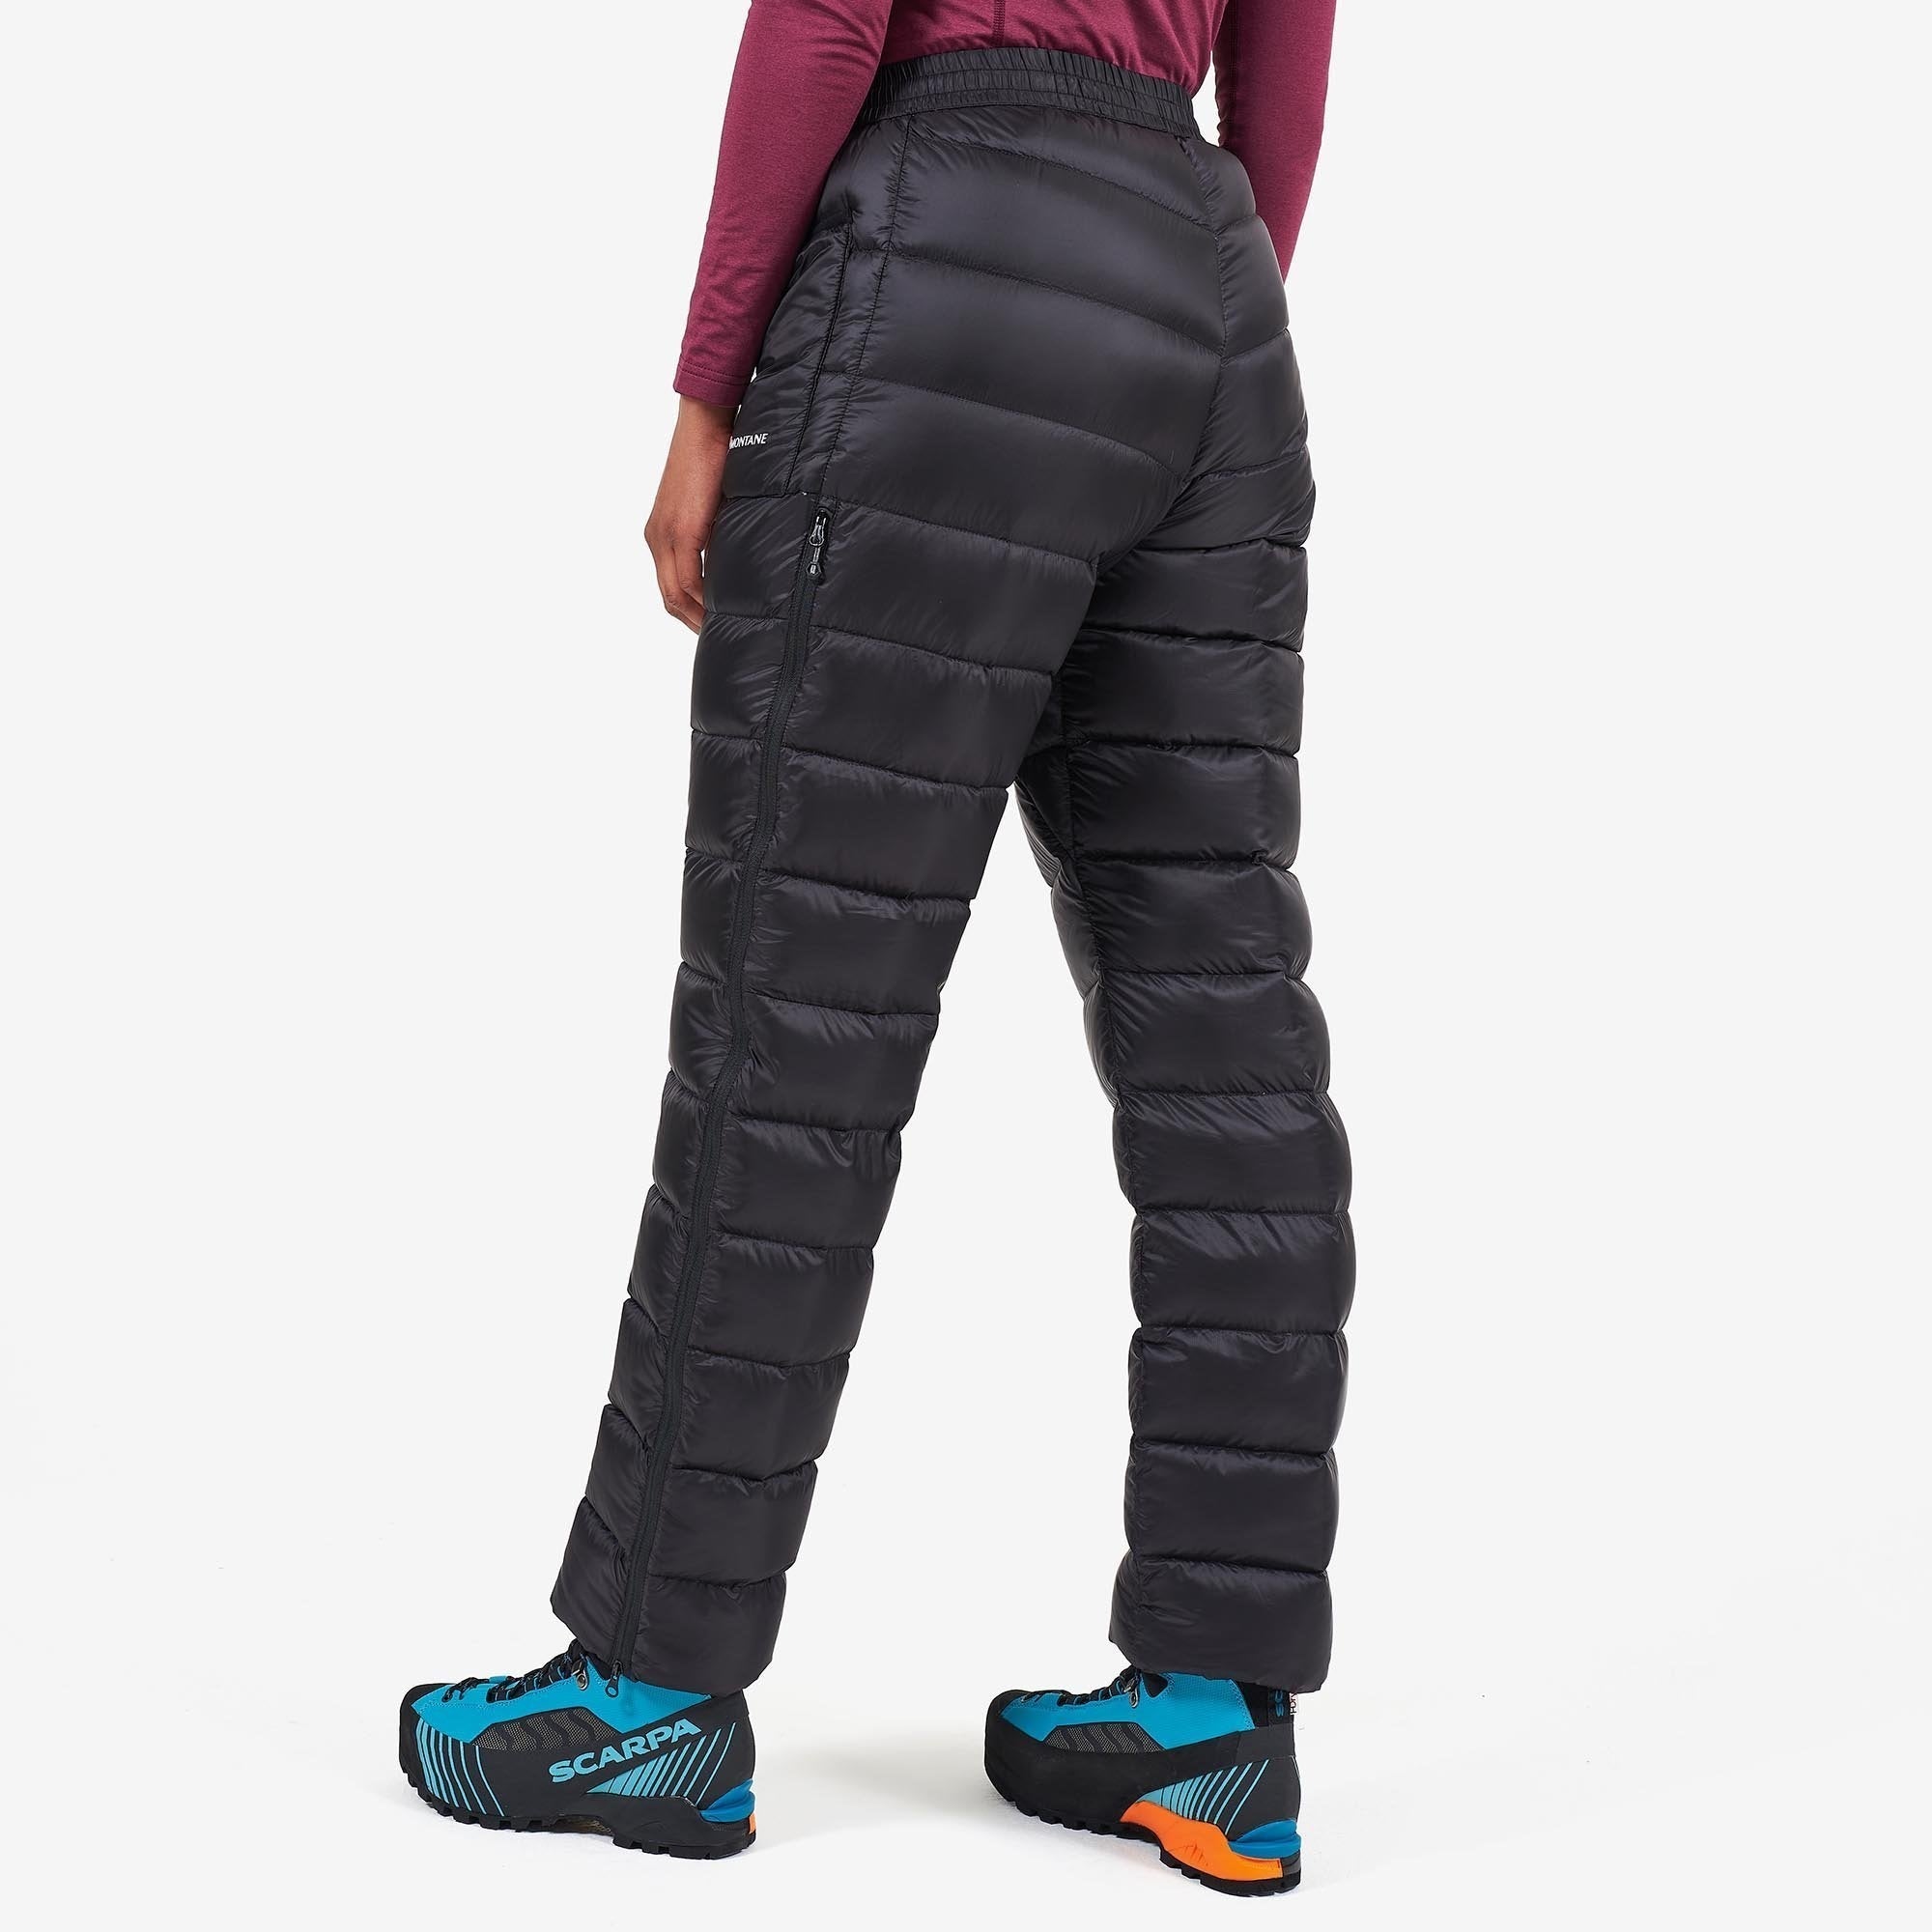 Hfyihgf Women's Lightweight Puffy Pants Puffer Quilted Ski Insulation Pants  for Winter Snow(Black,M) - Walmart.com